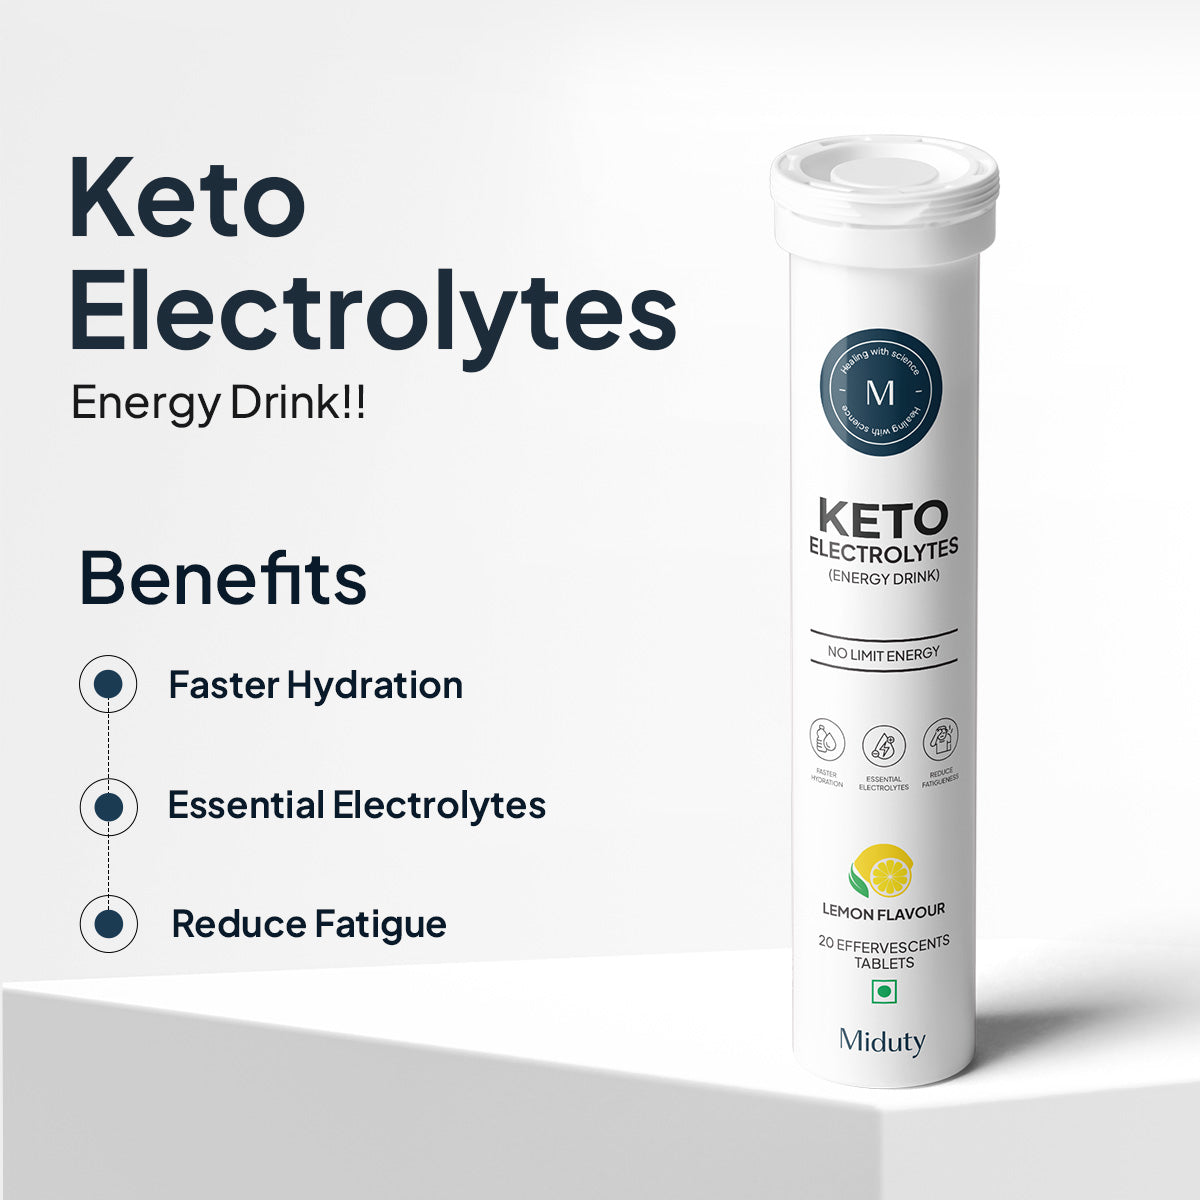 Keto Electrolytes (Energy Drink) - Adults